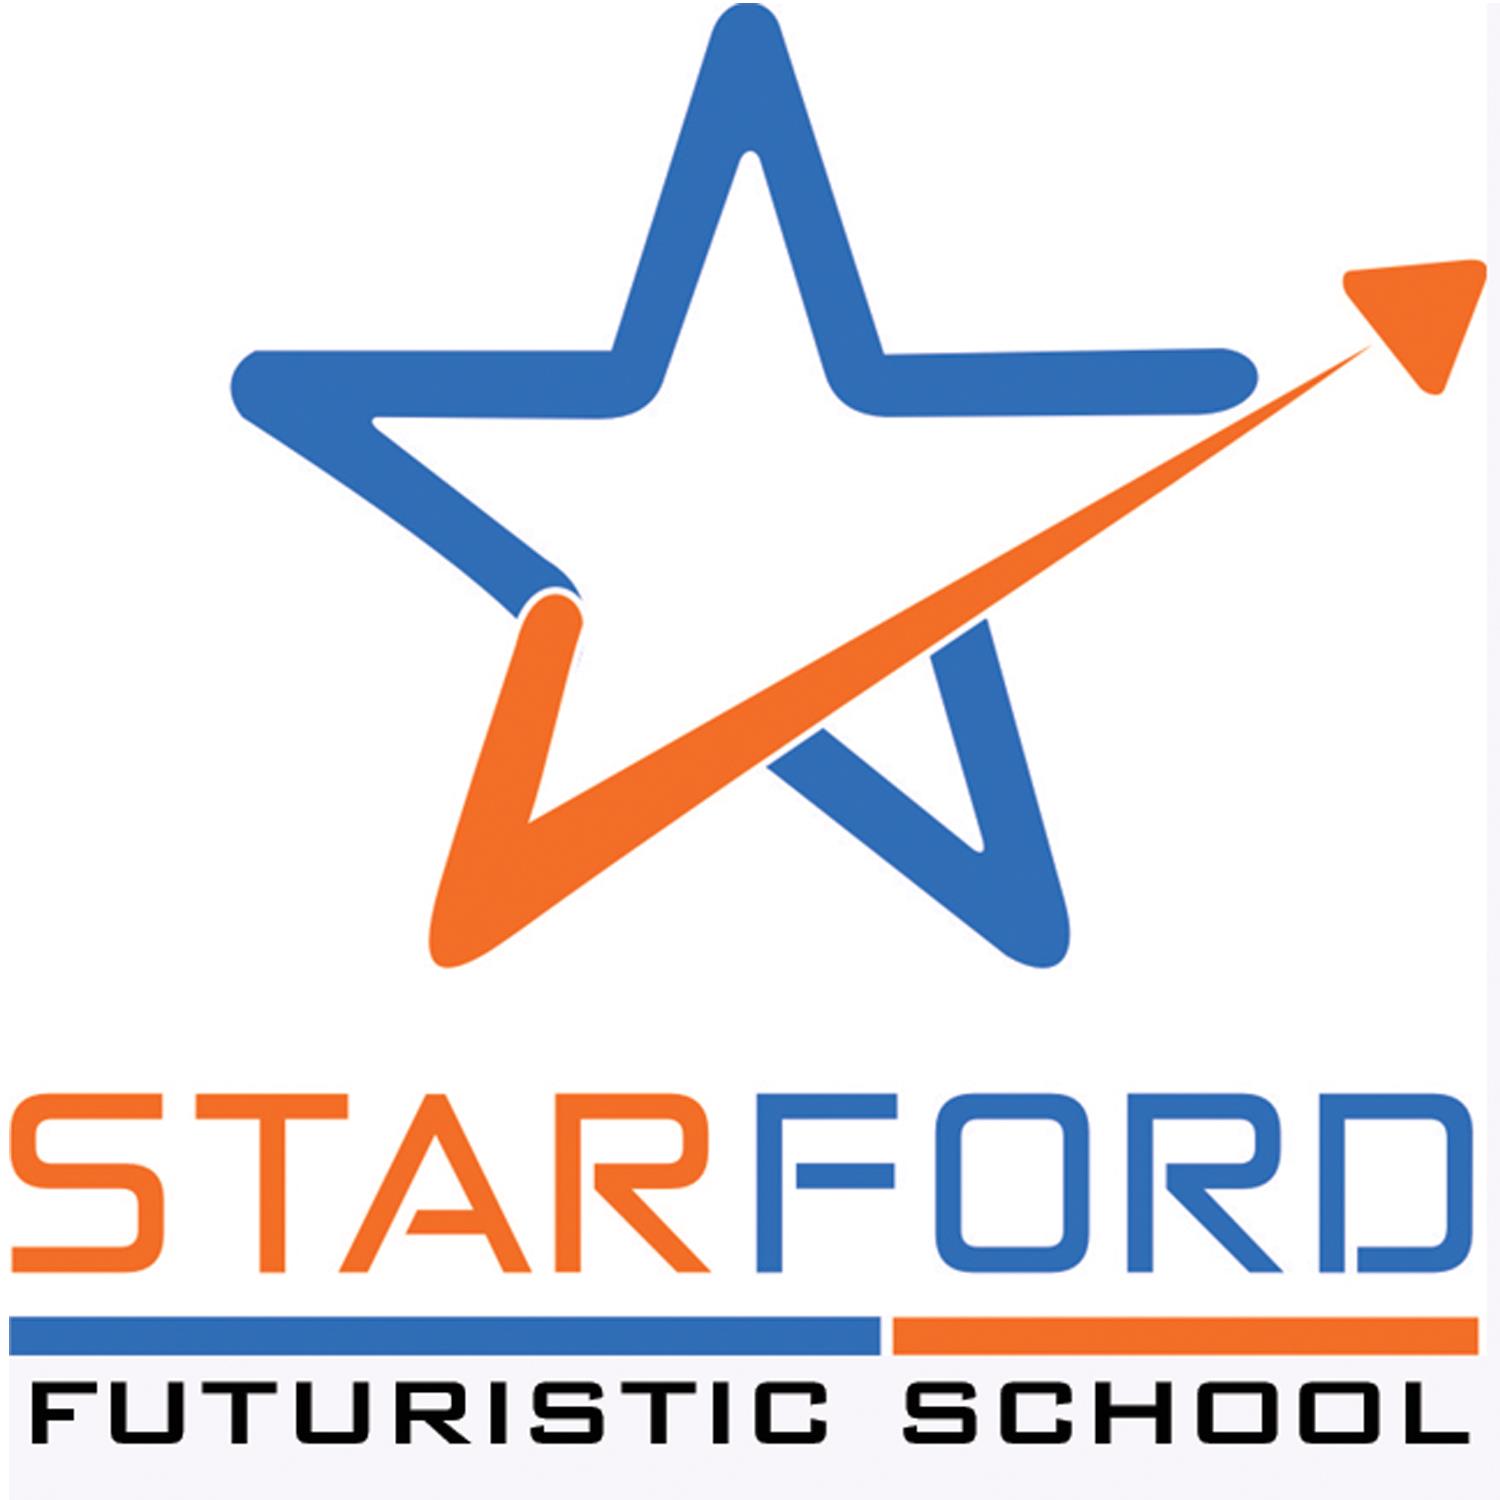 Starford School|Schools|Education